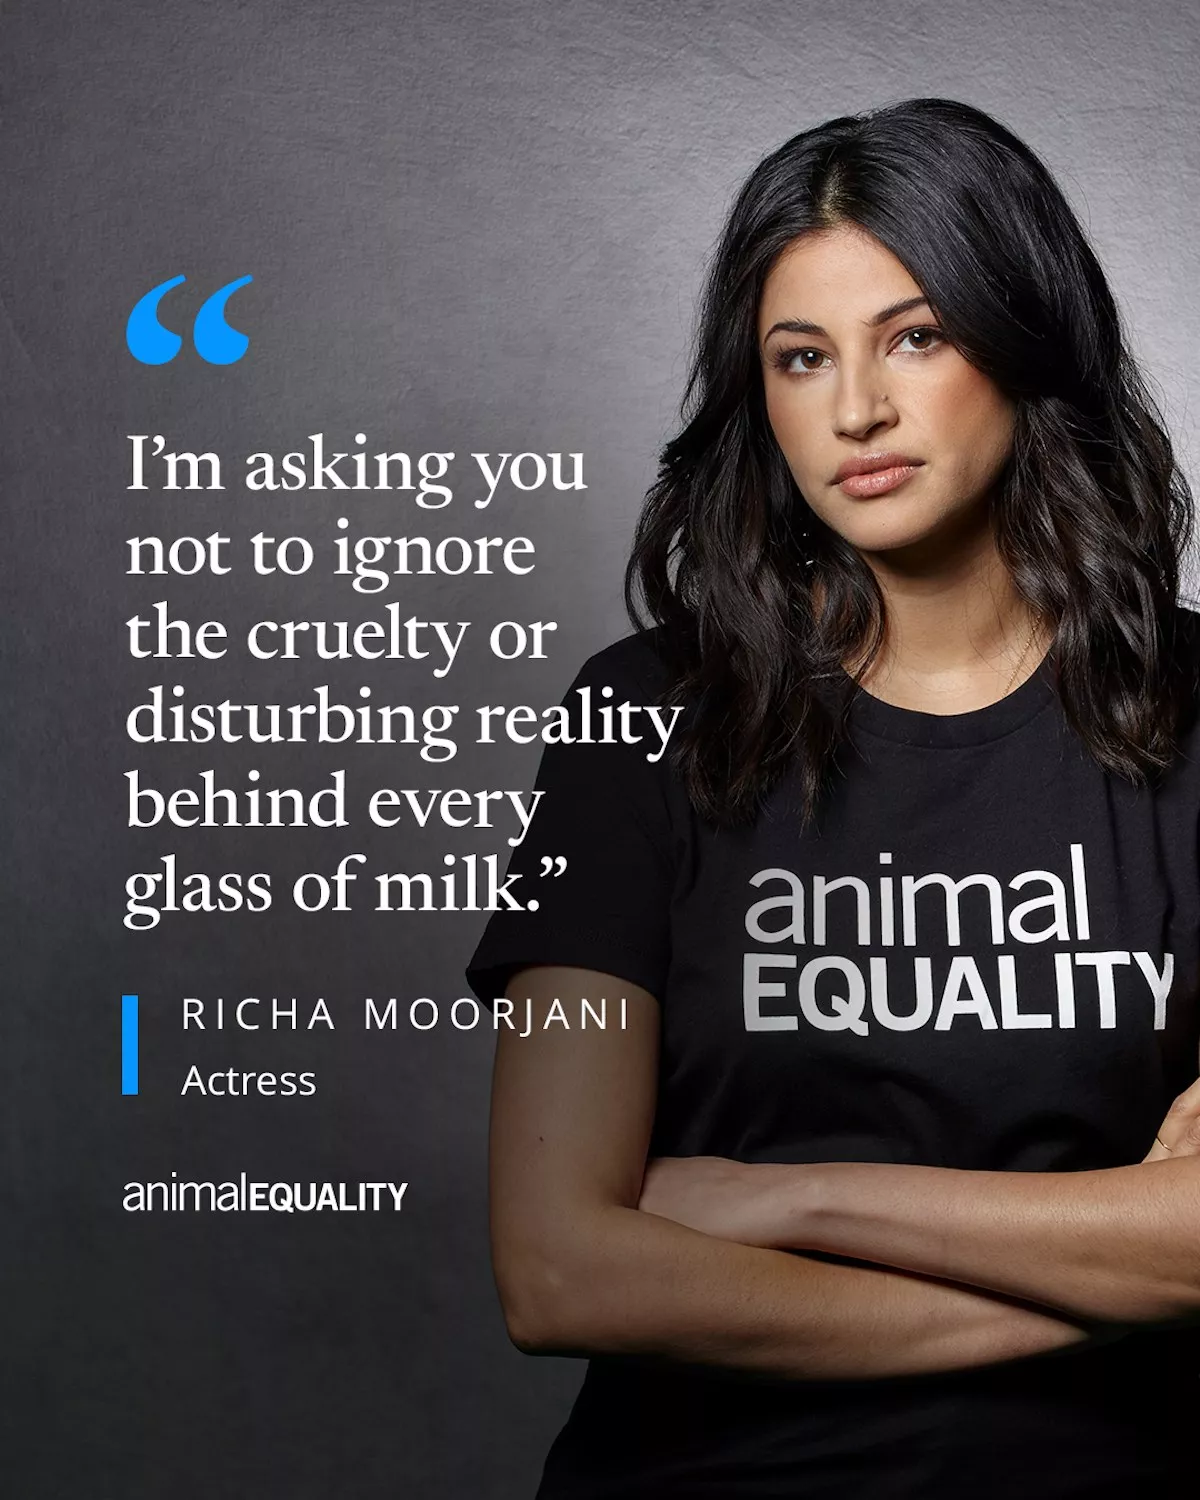 Richa Moorjani con camiseta de Igualdad Animal.